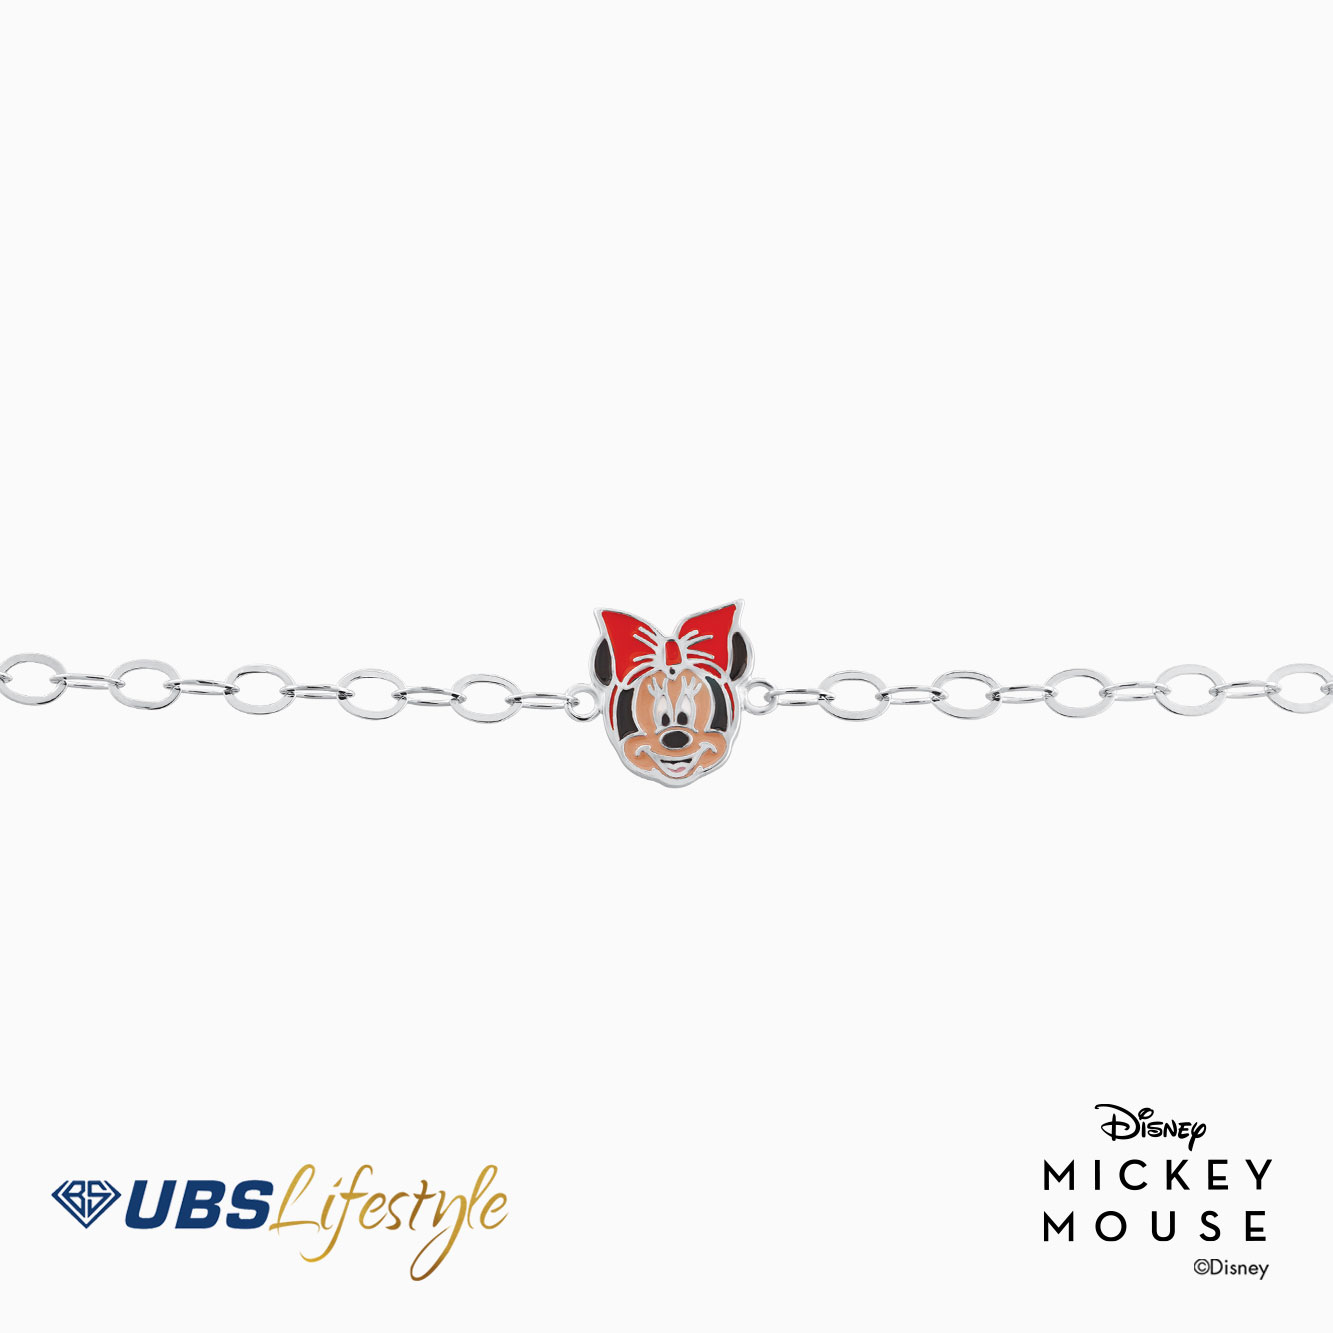 UBS Gelang Emas Anak Disney Minnie Mouse - Kgy0062 - 17K